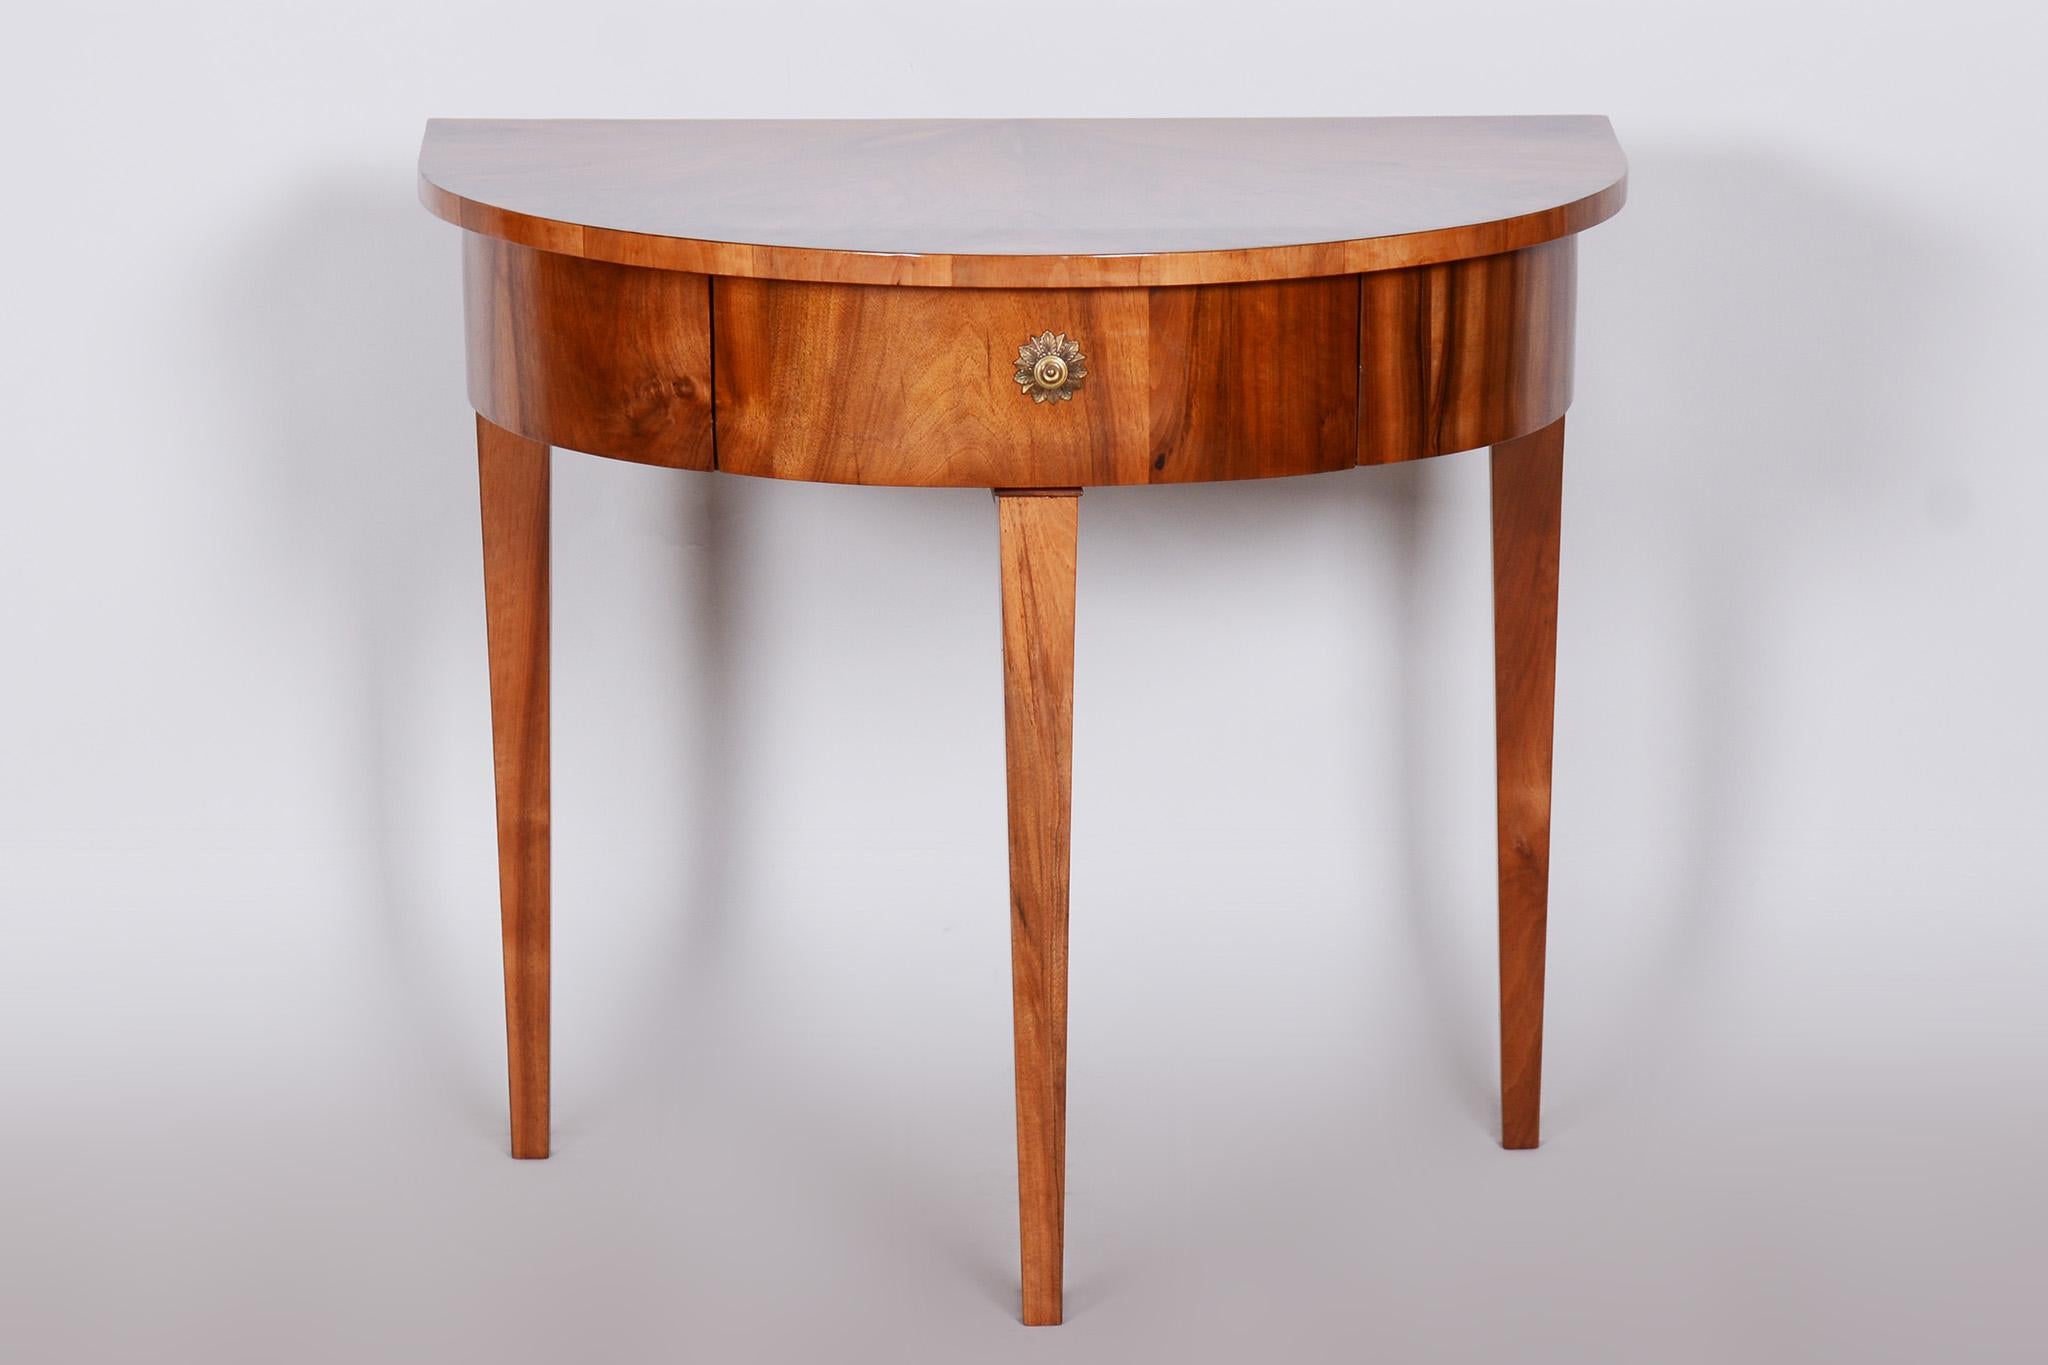 Restored Biedermeier walnut side table

Source: Czechia
Period: 1820-1829
Material: Walnut

Revived polish.